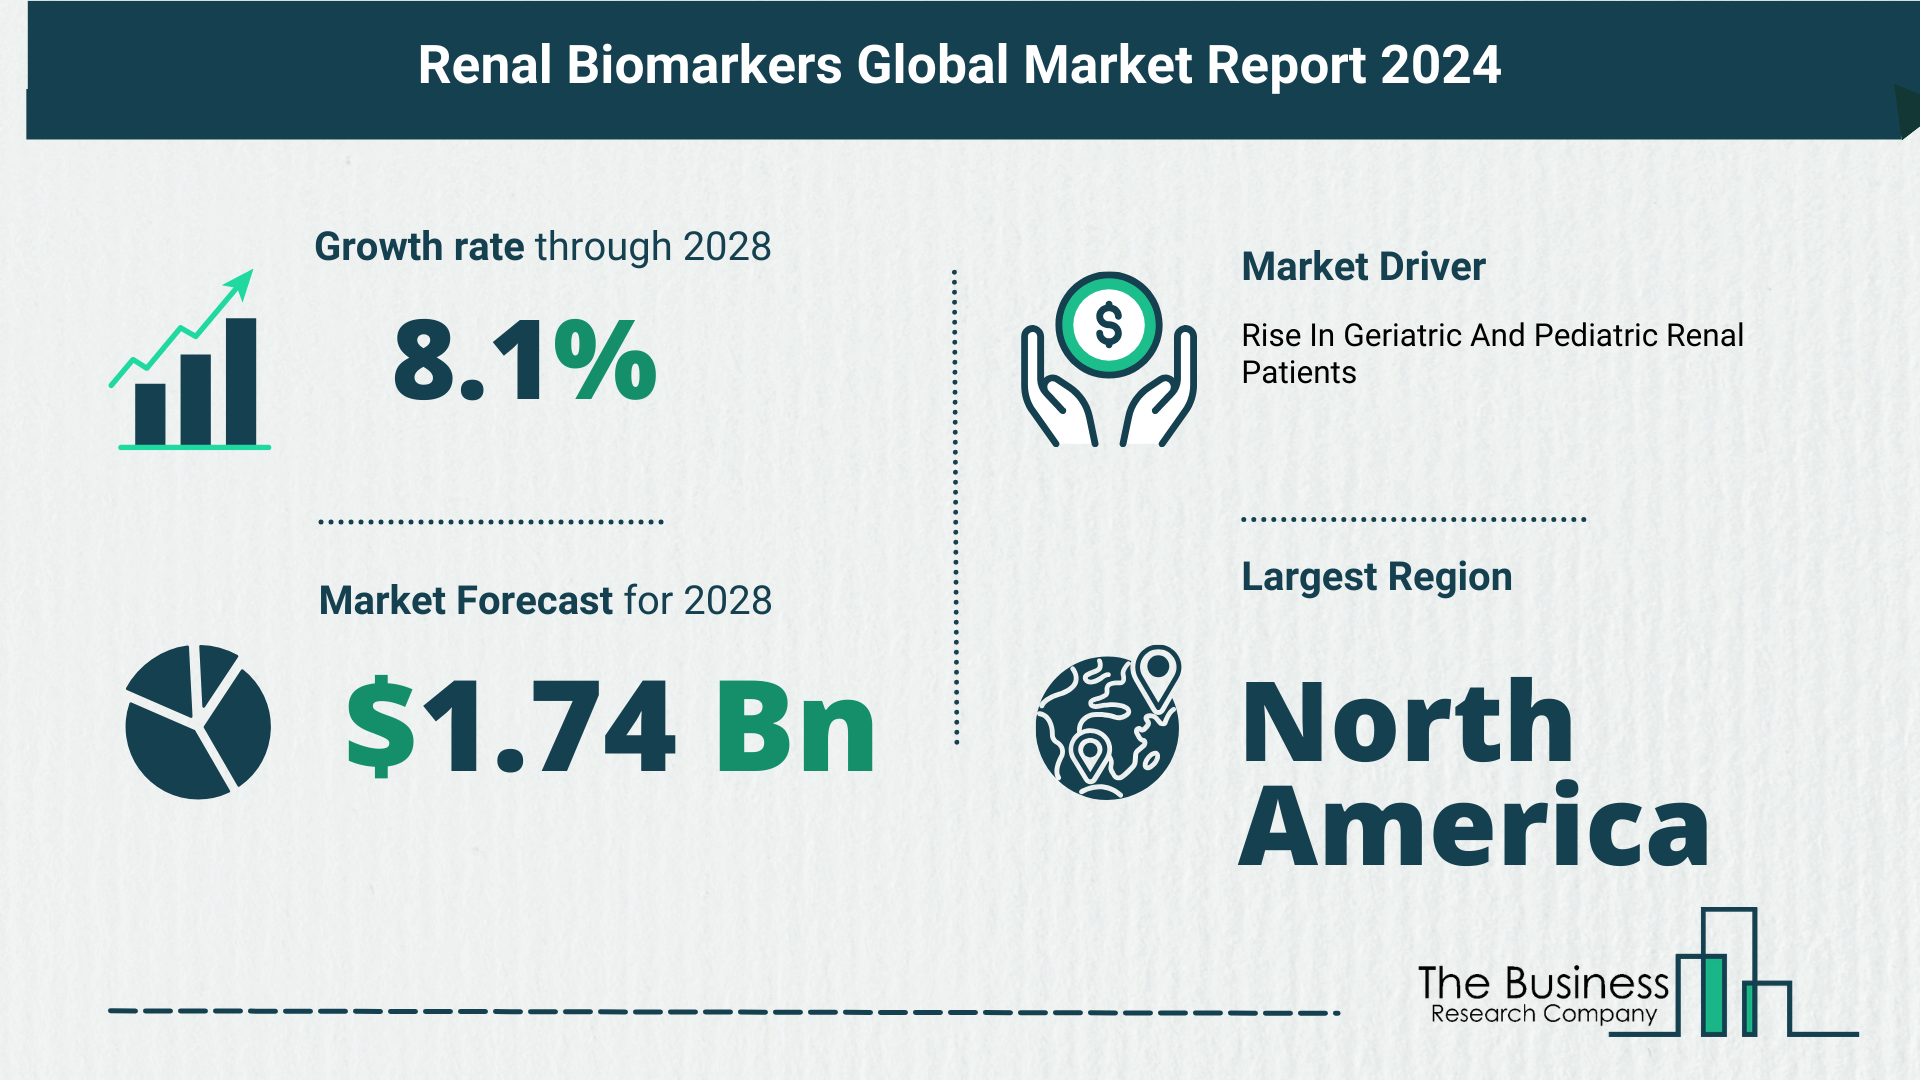 Global Renal Biomarkers Market